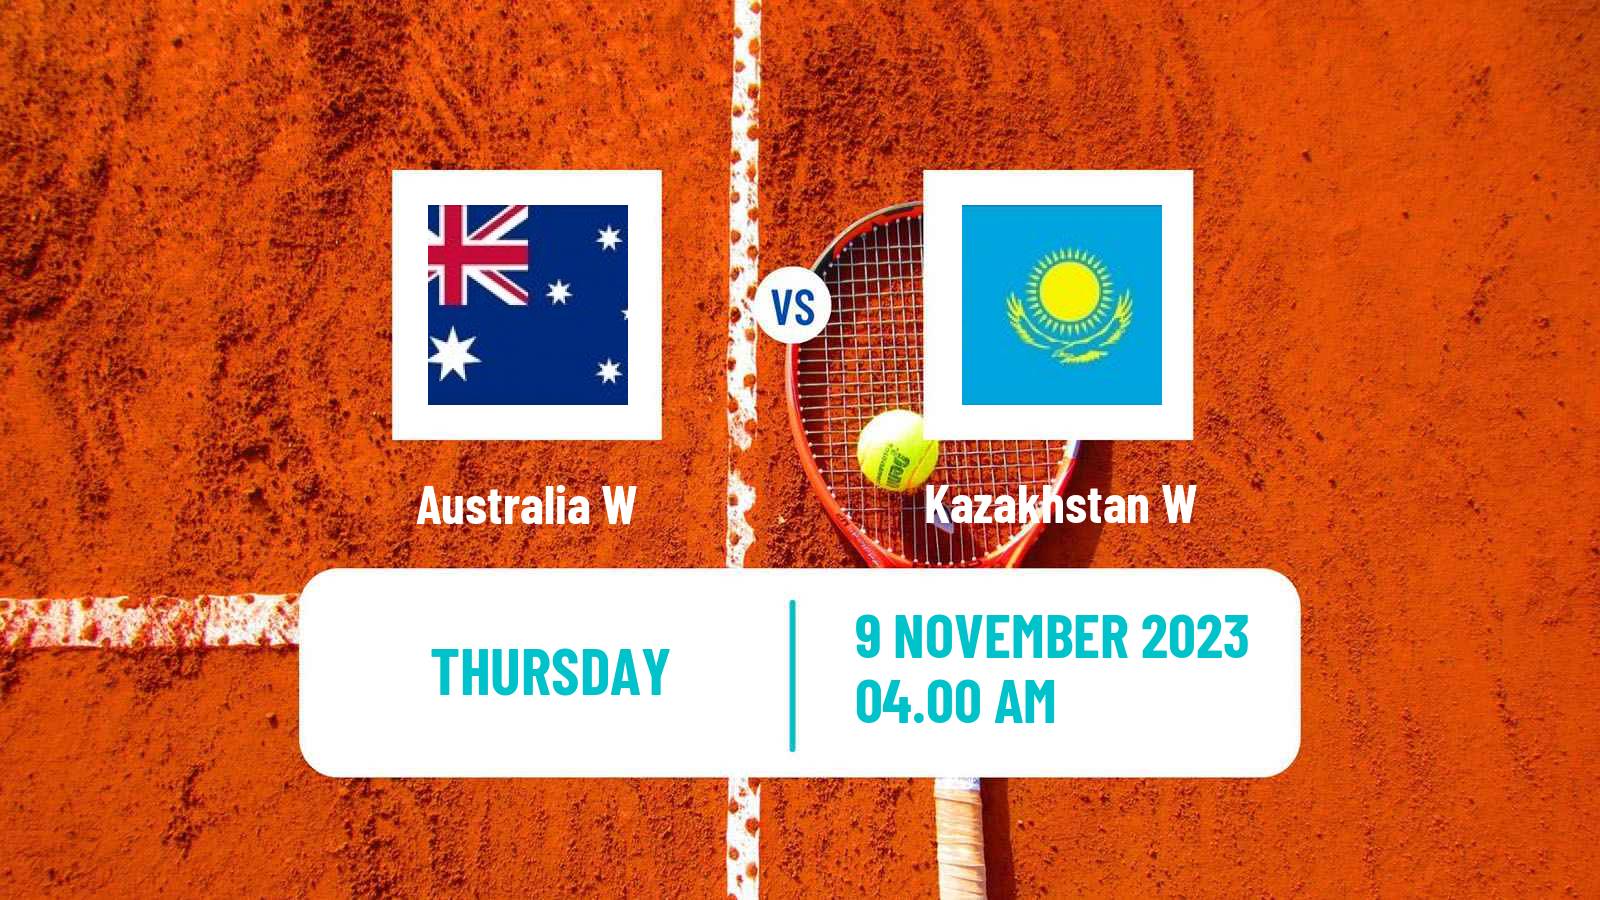 Tennis WTA Billie Jean King Cup World Group Teams Australia W - Kazakhstan W